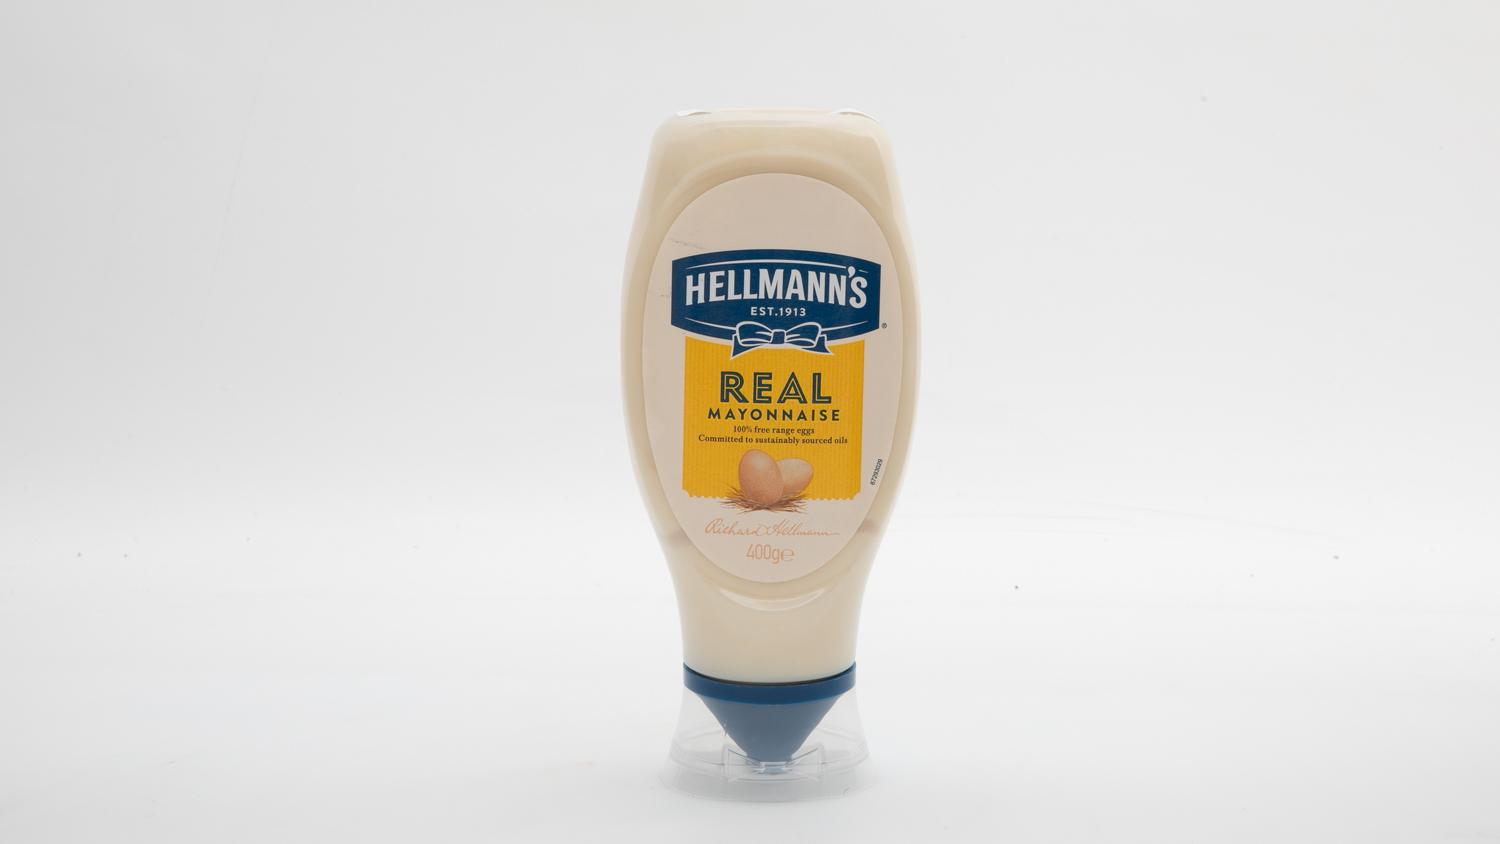 Hellman's Real Mayonnaise carousel image